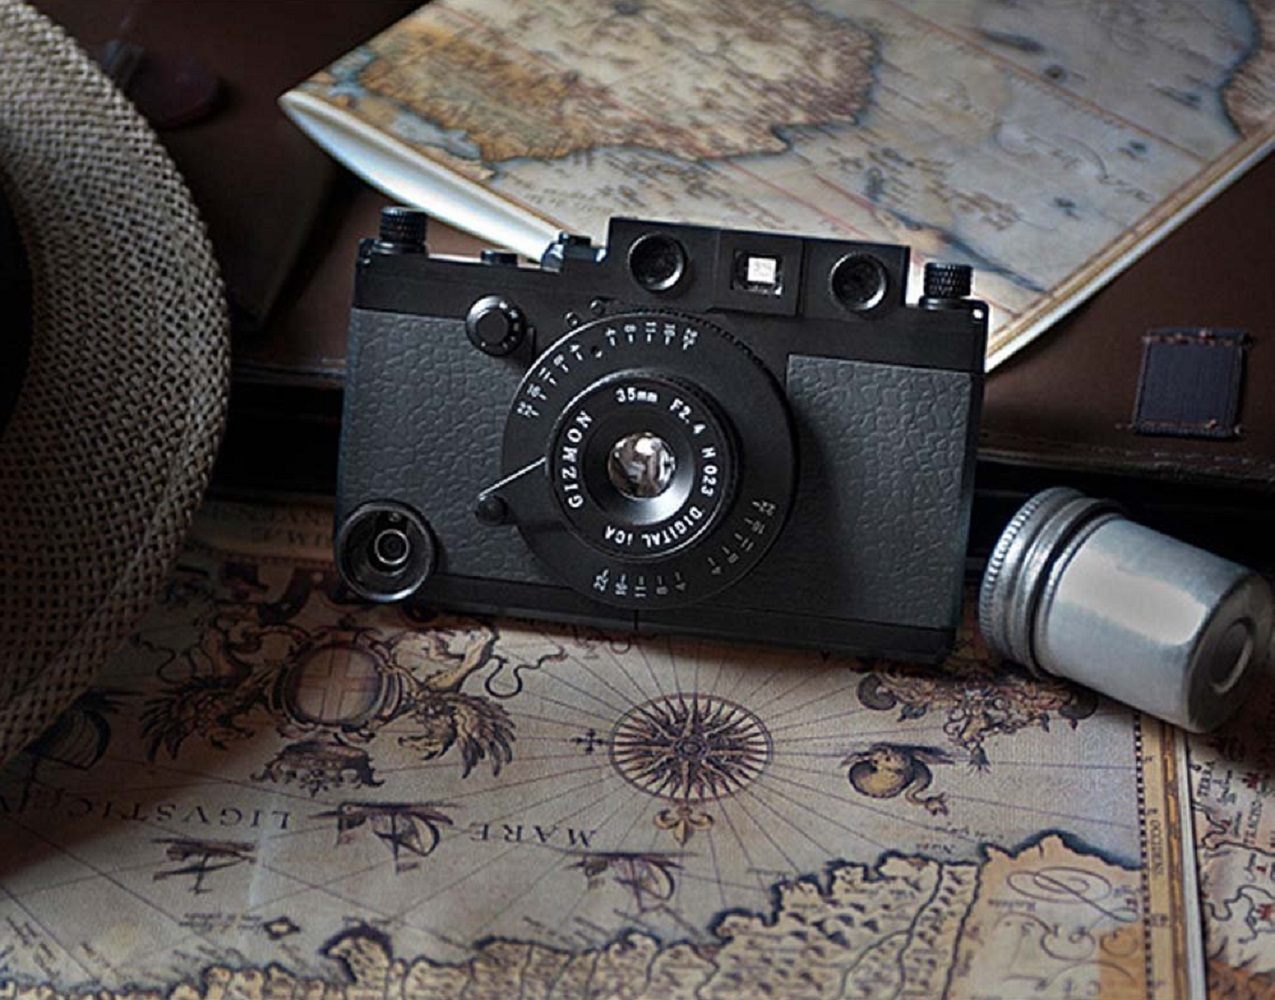 Gizmon Vintage Camera Case For iPhone SE/5s